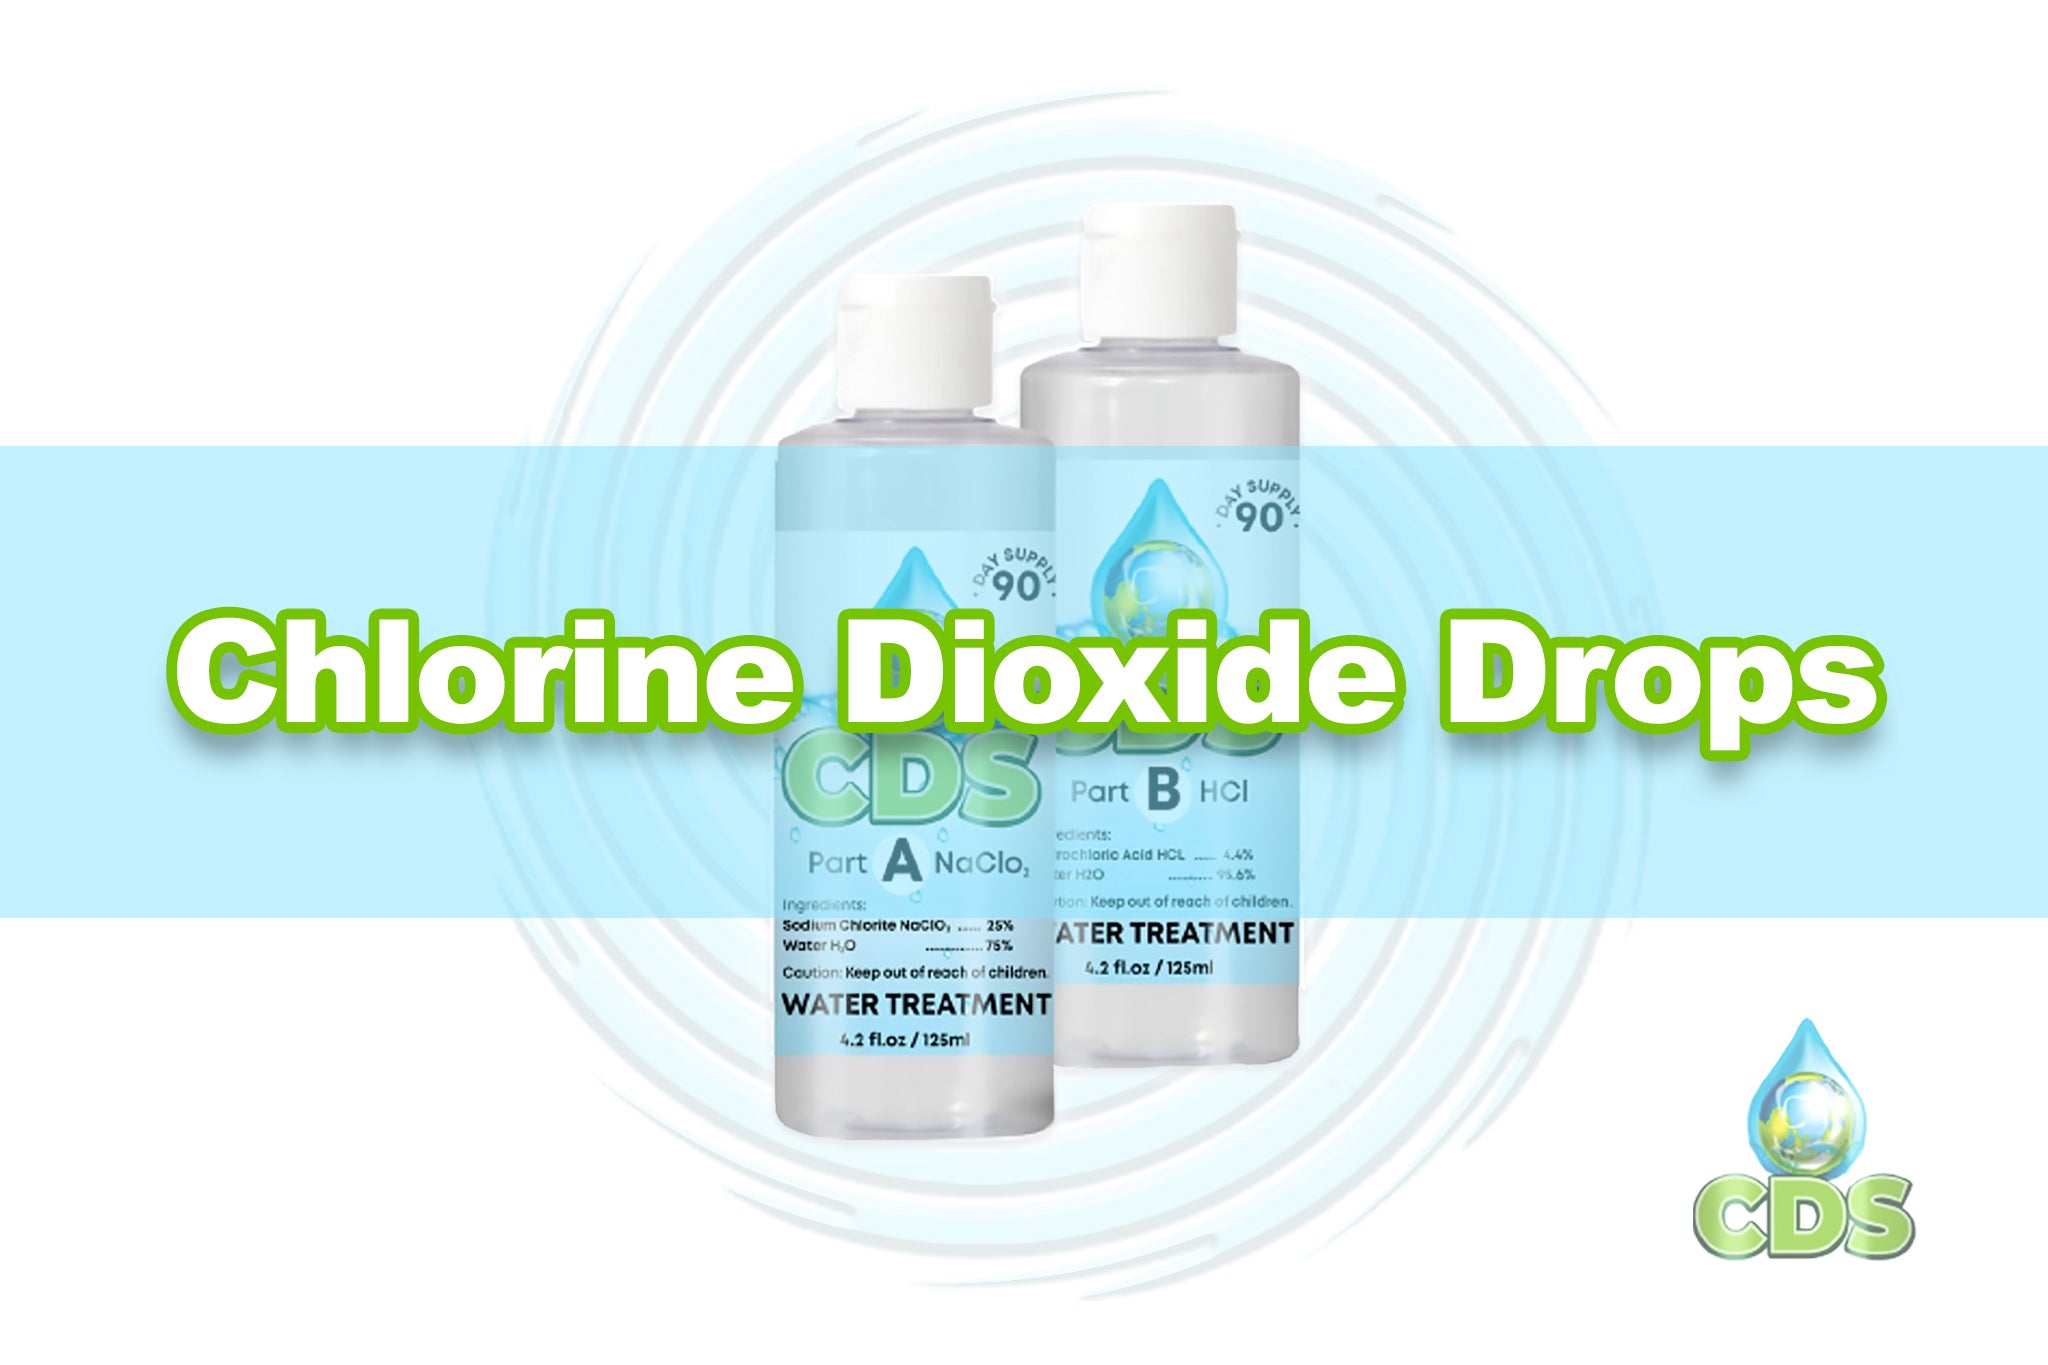 Chlorine Dioxide Drops